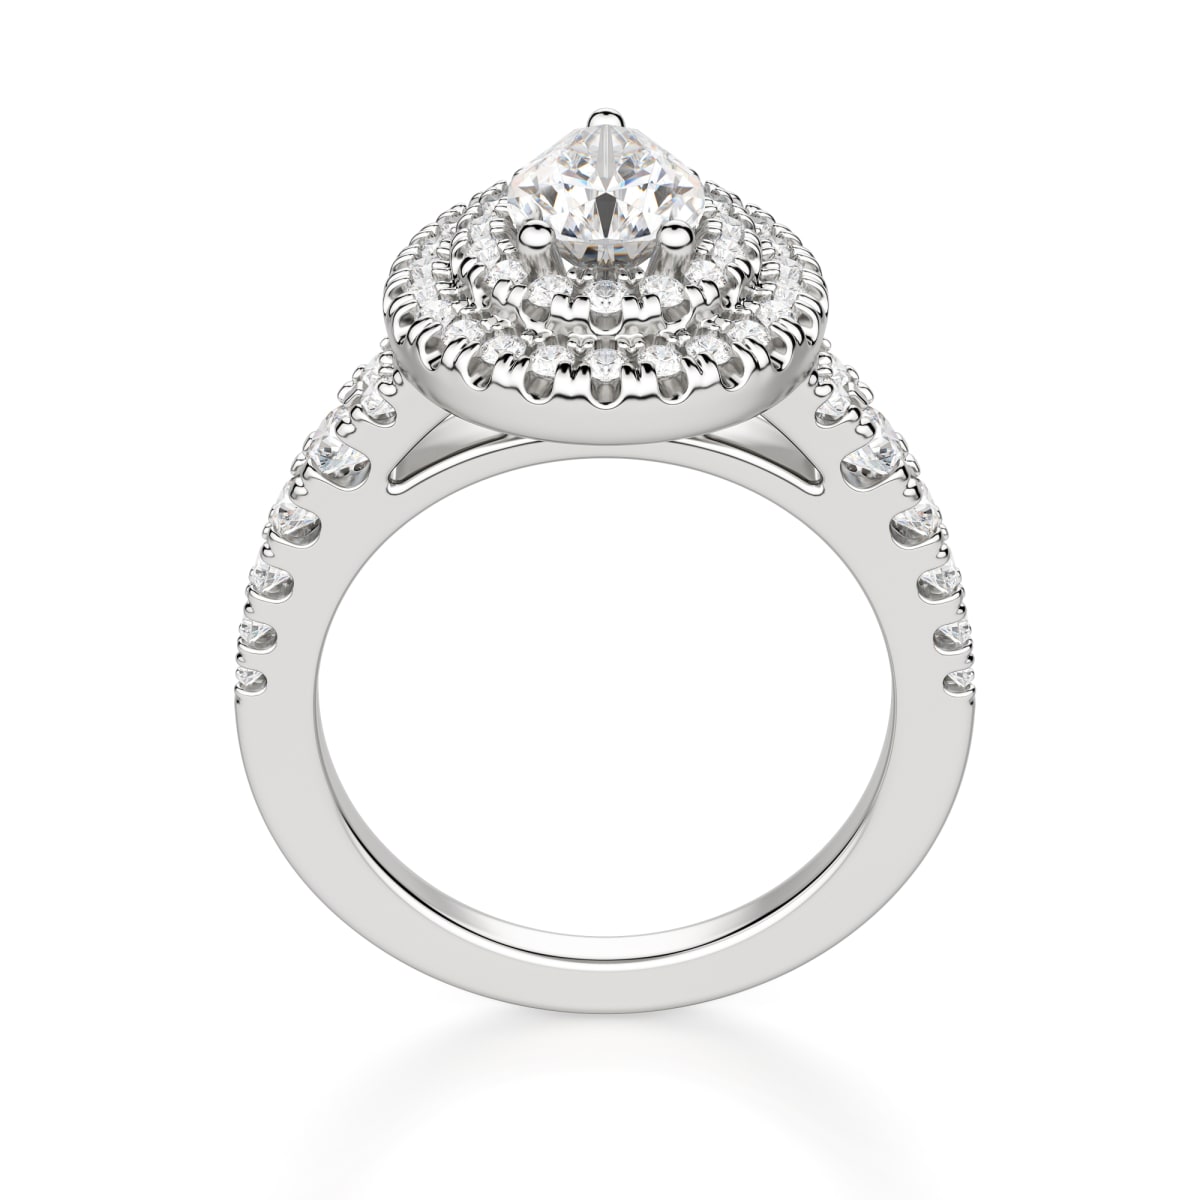 Fillagree Diamond Shape ring,Sterling Silver 925, size H,I,J,K,L,M,N,O,P,Q,R,S,T  | eBay